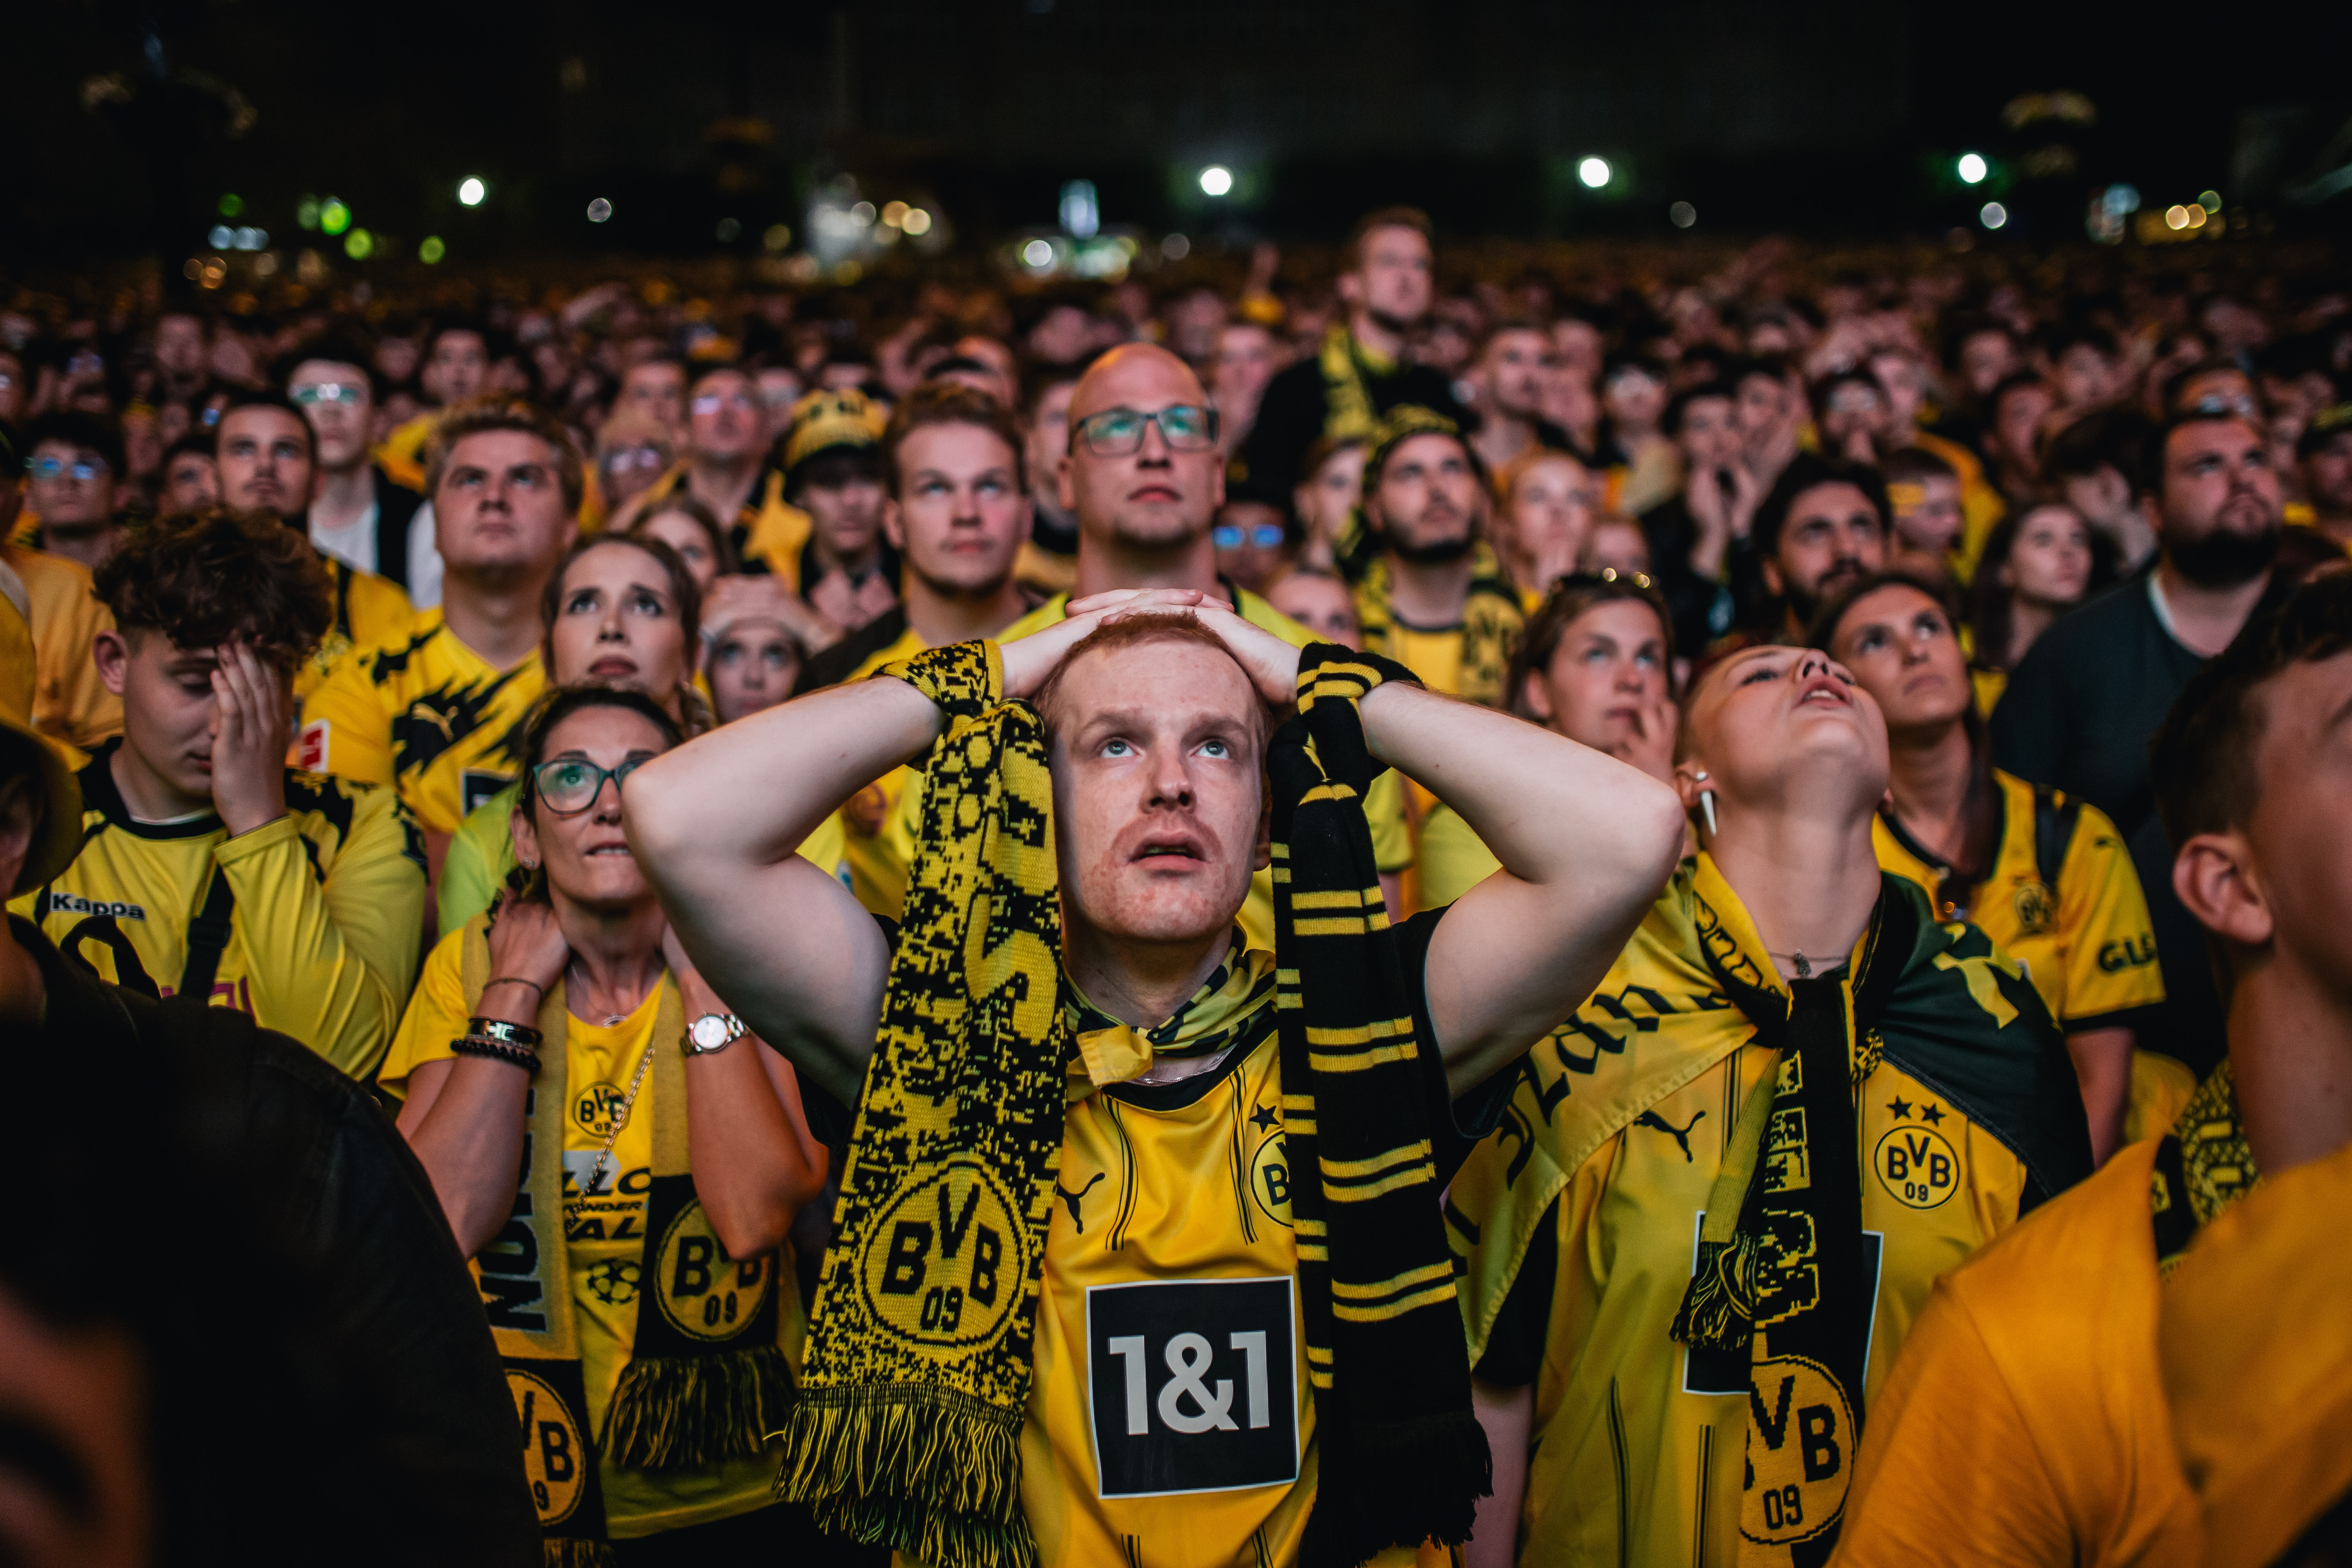 UEFA Champions League Final match live broadcast in Dortmund